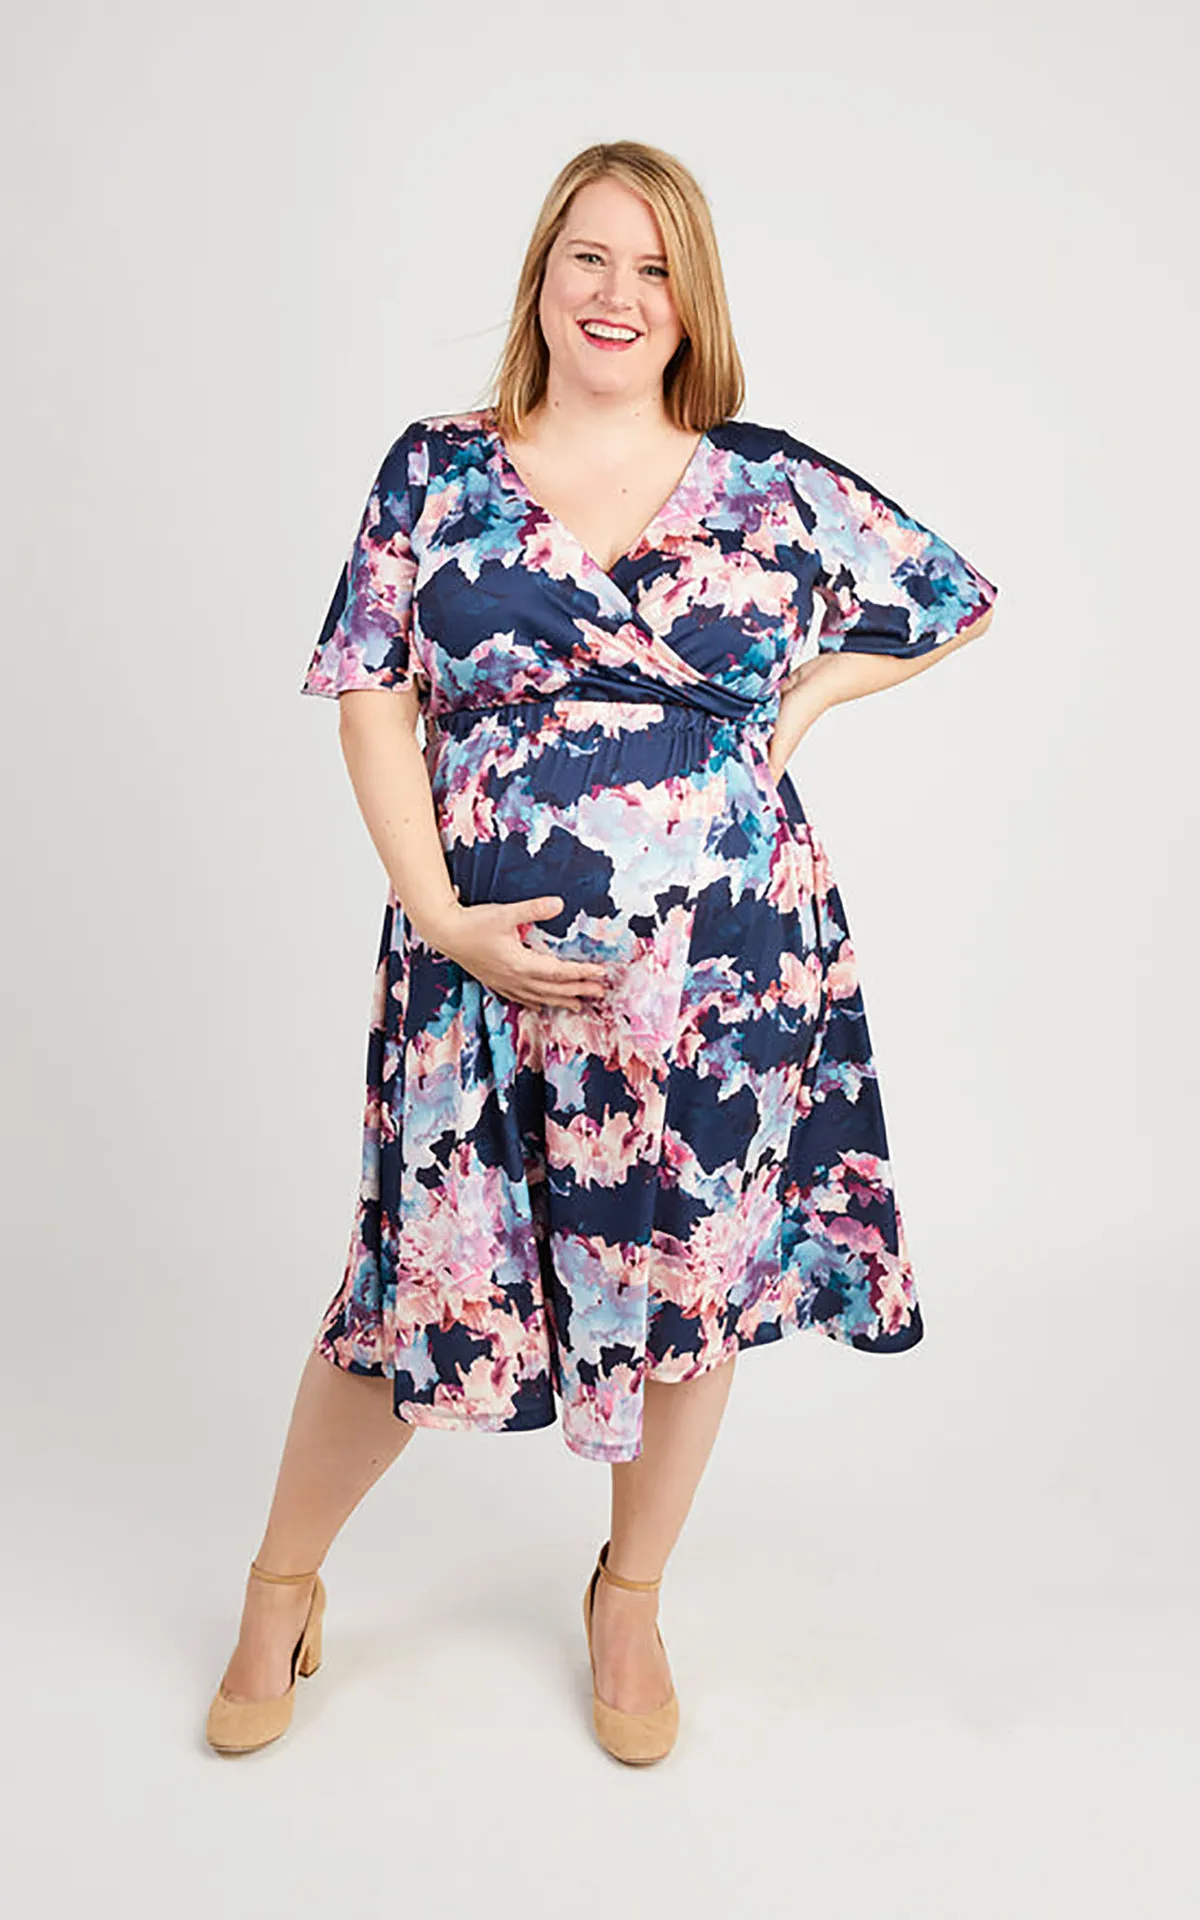 Cashmerette Alcott maternity sewing pattern